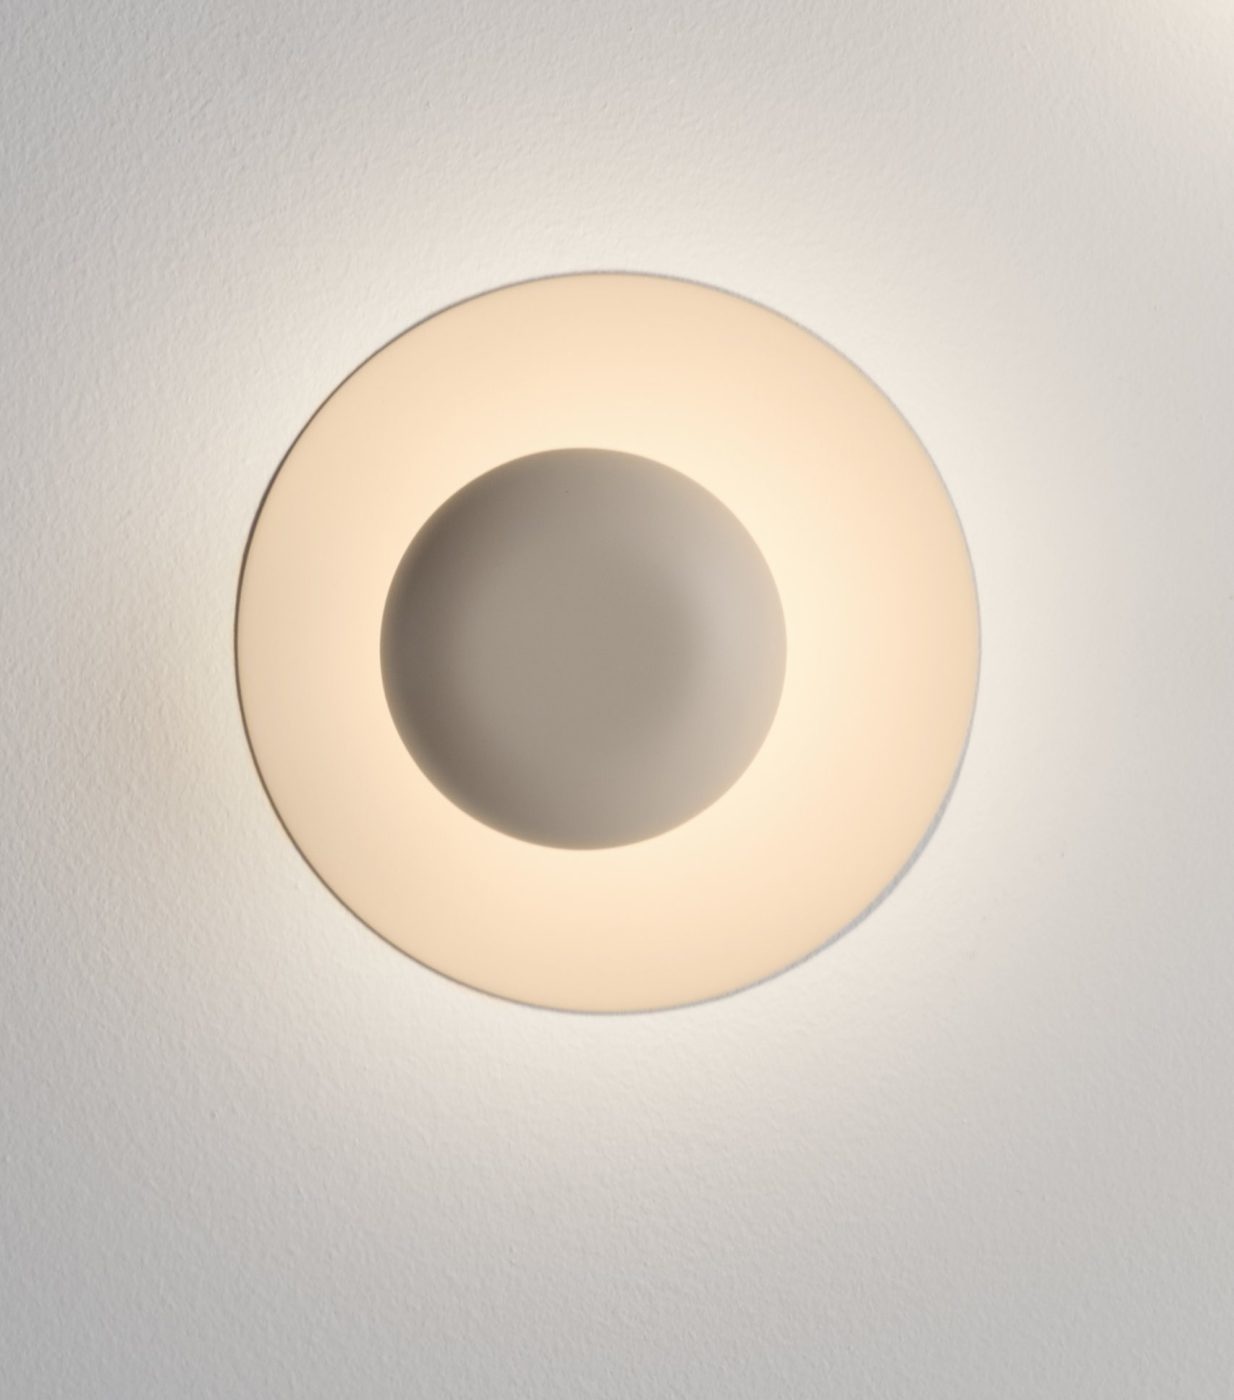 verschil verlichten muis Vibia Funnel 2014 plafondlamp - Lichtstudio van der Hee